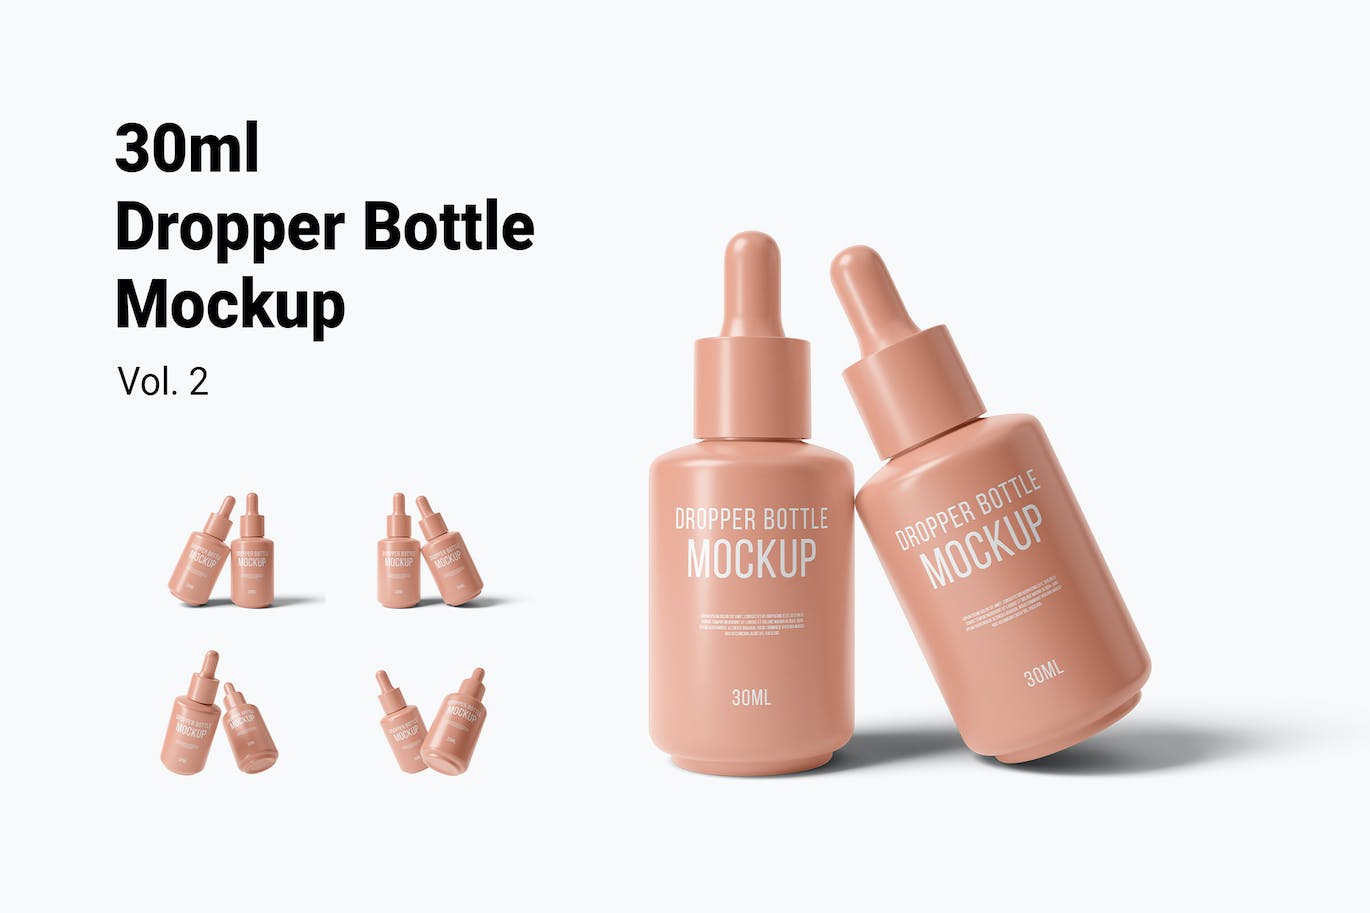 30ml滴管瓶包装设计样机v2 30ml Dropper Bottle Mockup Vol.2 样机素材 第1张